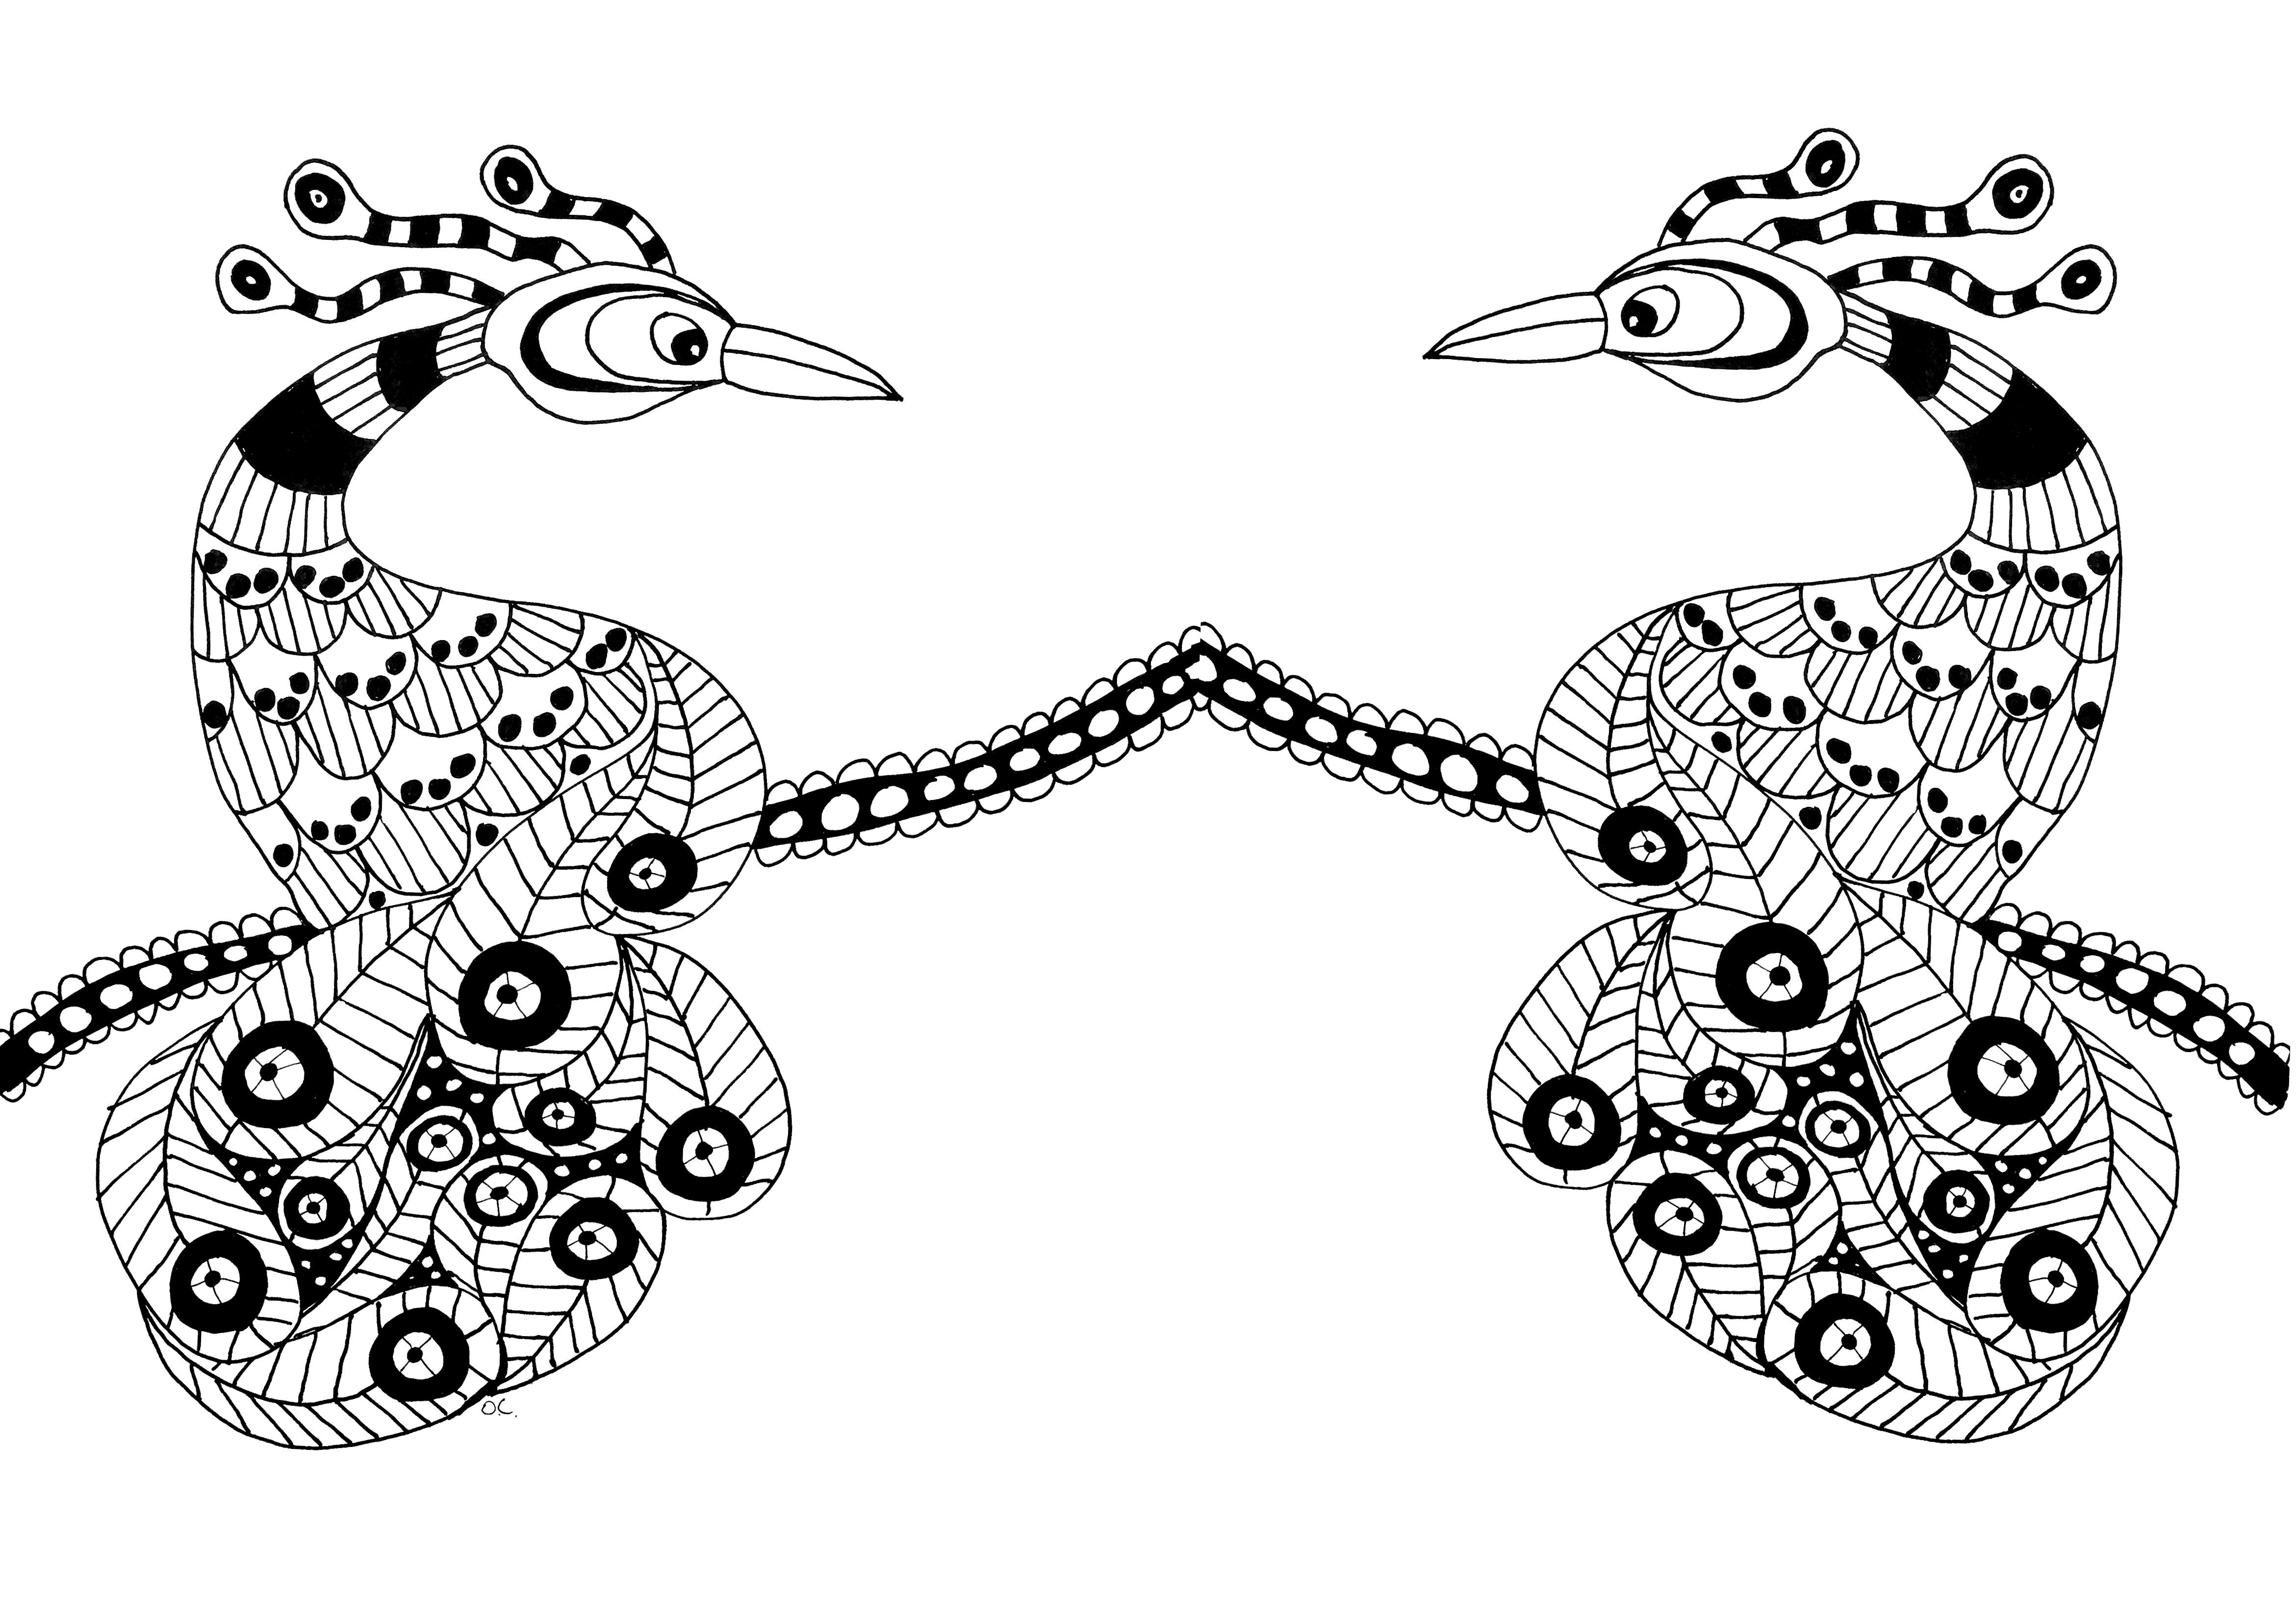 Two extroardinary birds, Artist : Olivier